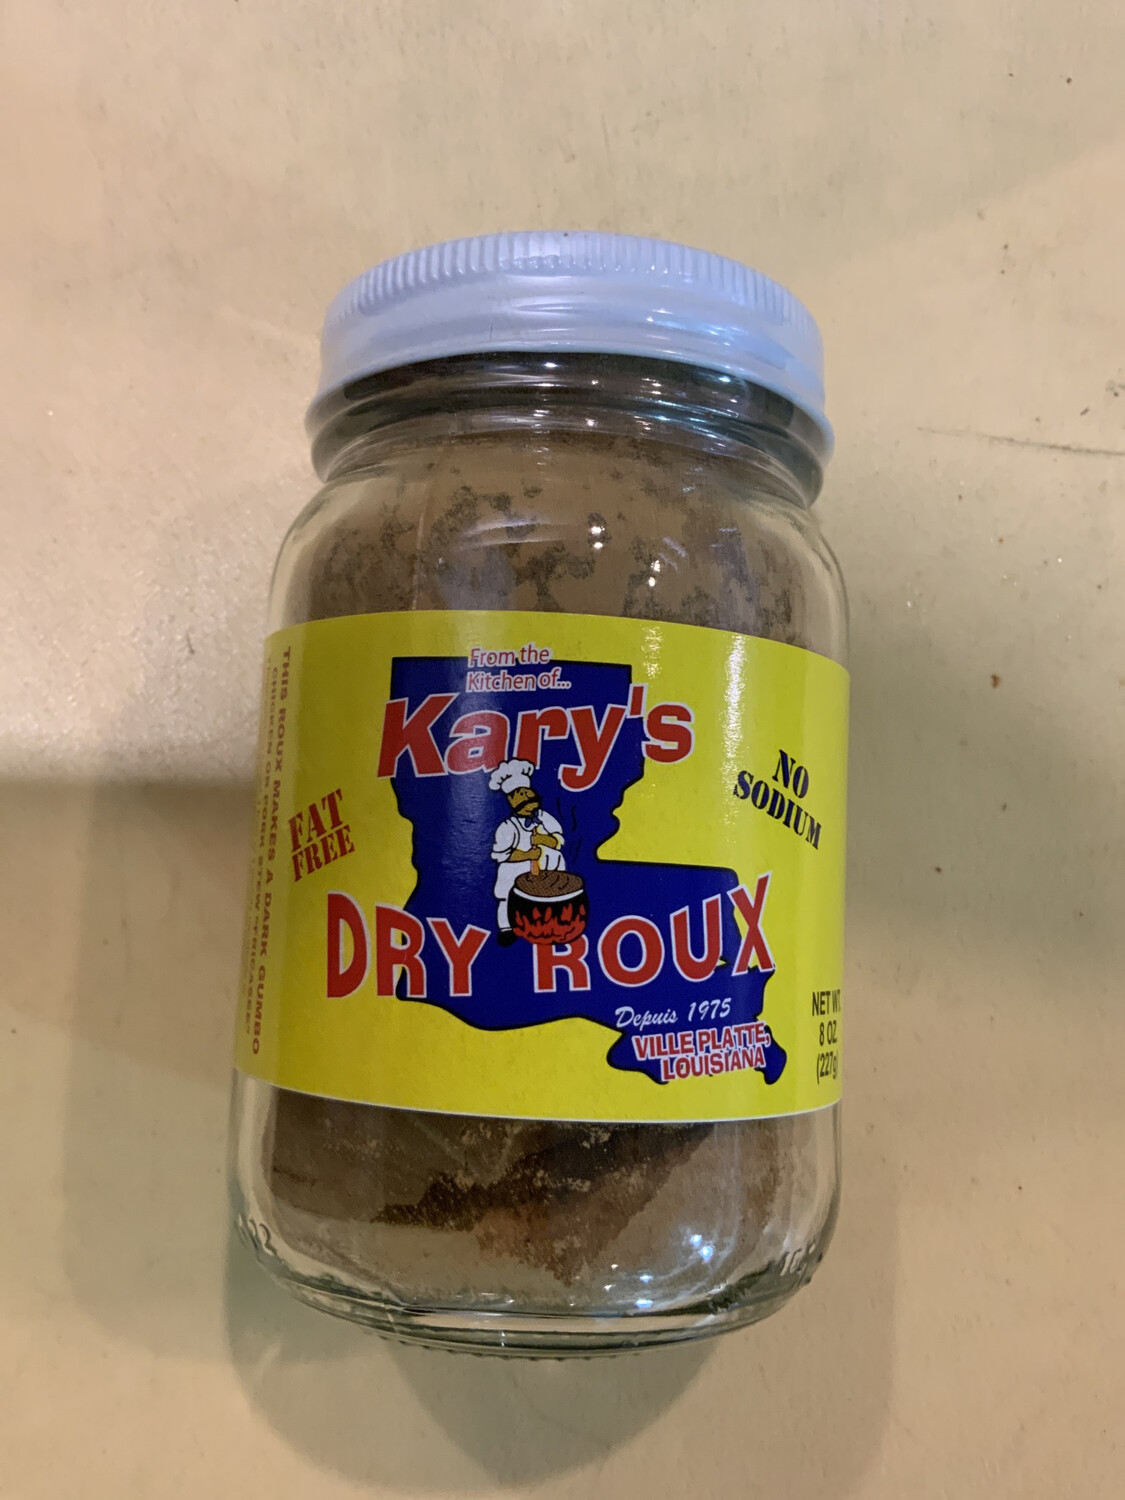 Kary's Dry Roux